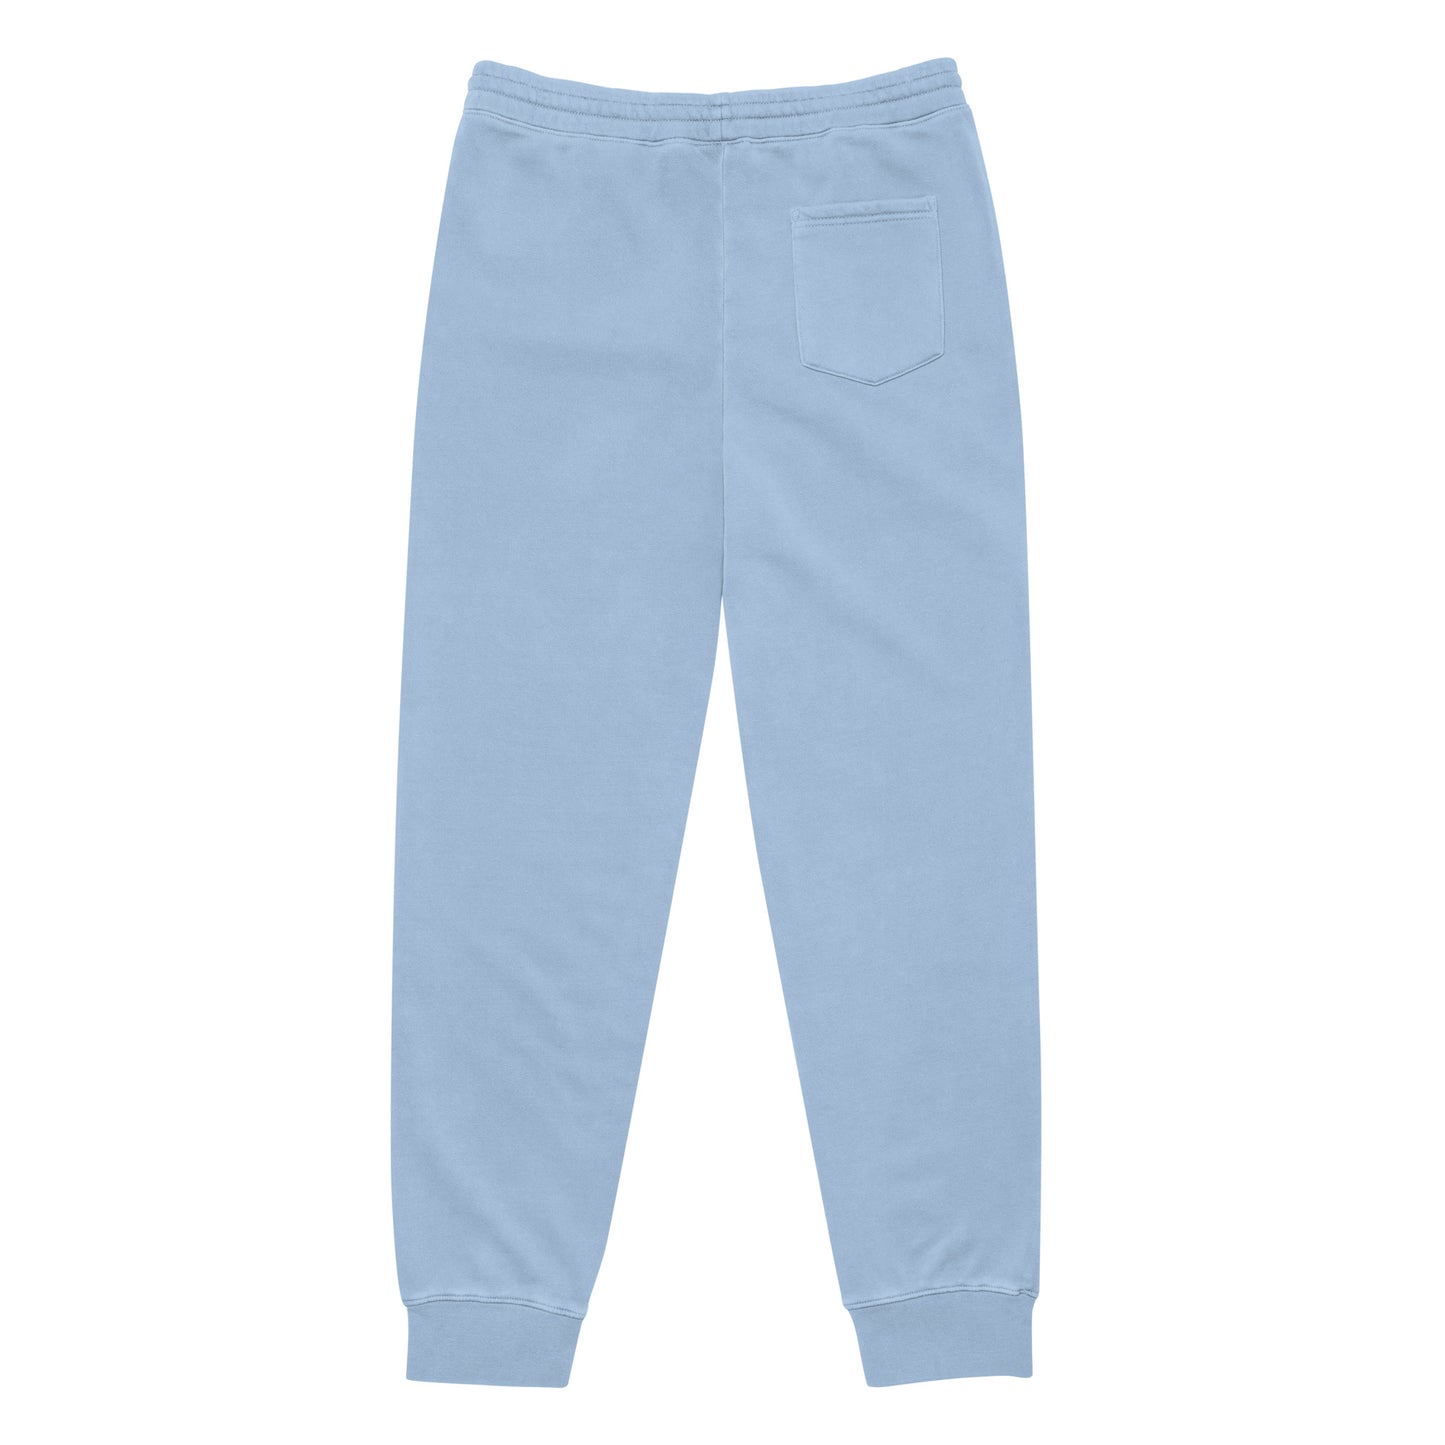 Common Ground pigment-dyed sweatpants